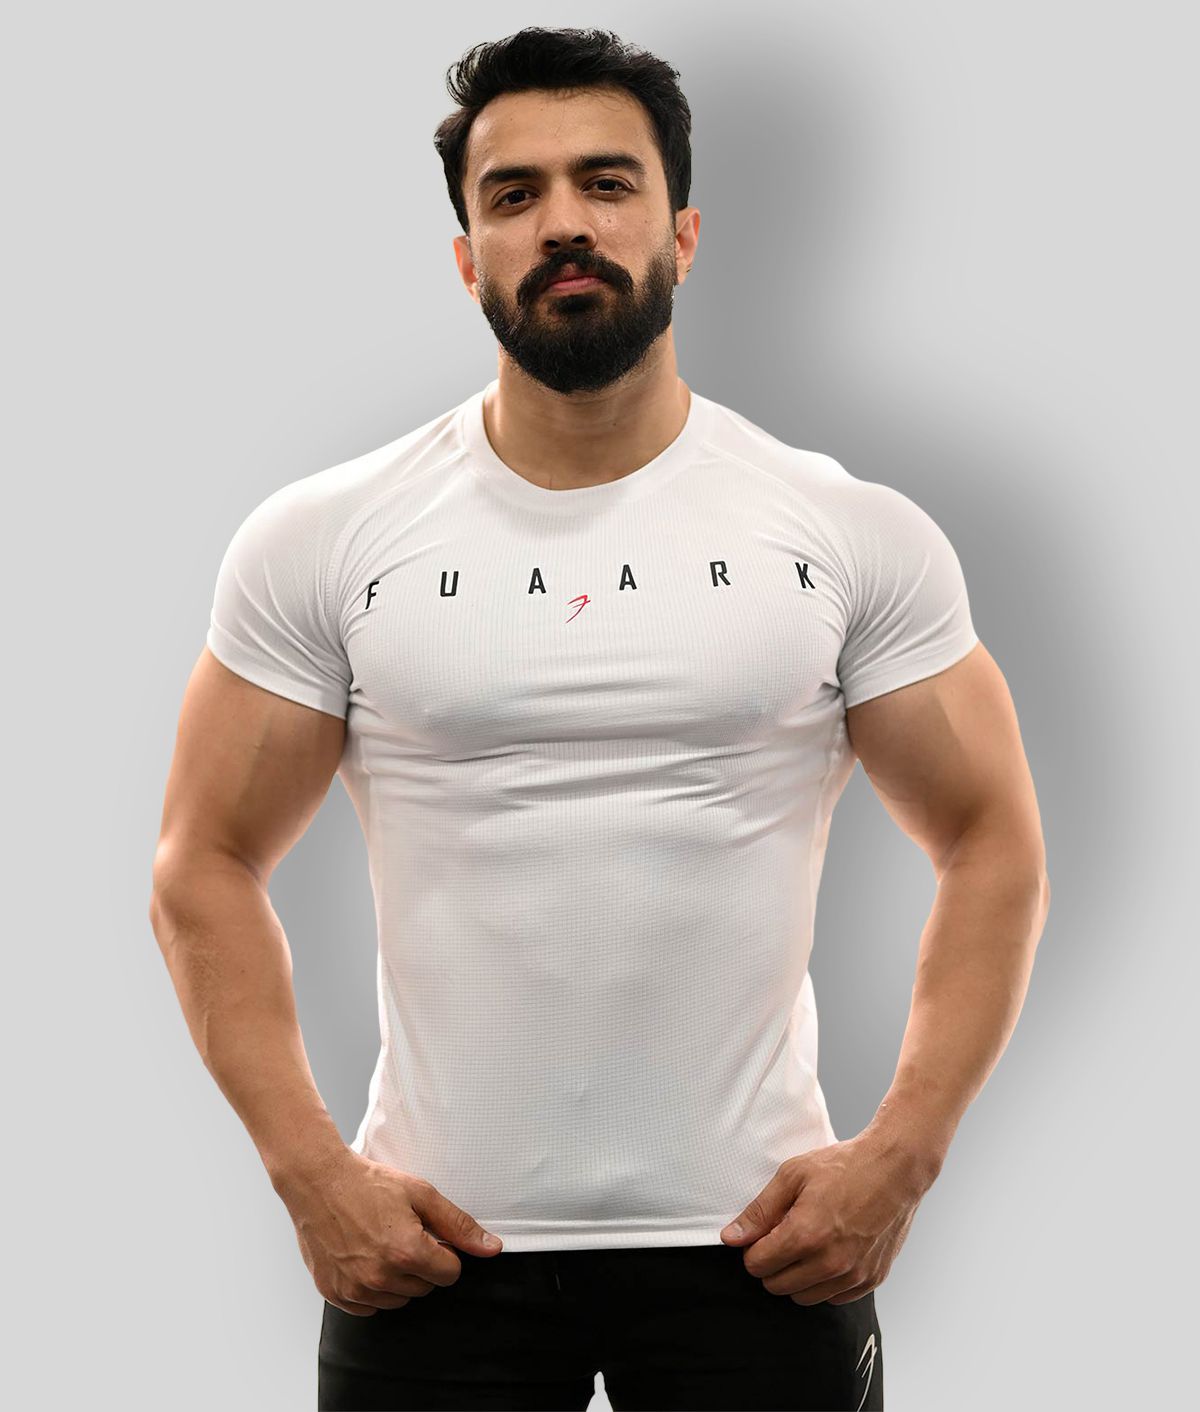     			Fuaark - White Polyester Regular Fit Men's Sports T-Shirt ( Pack of 1 )